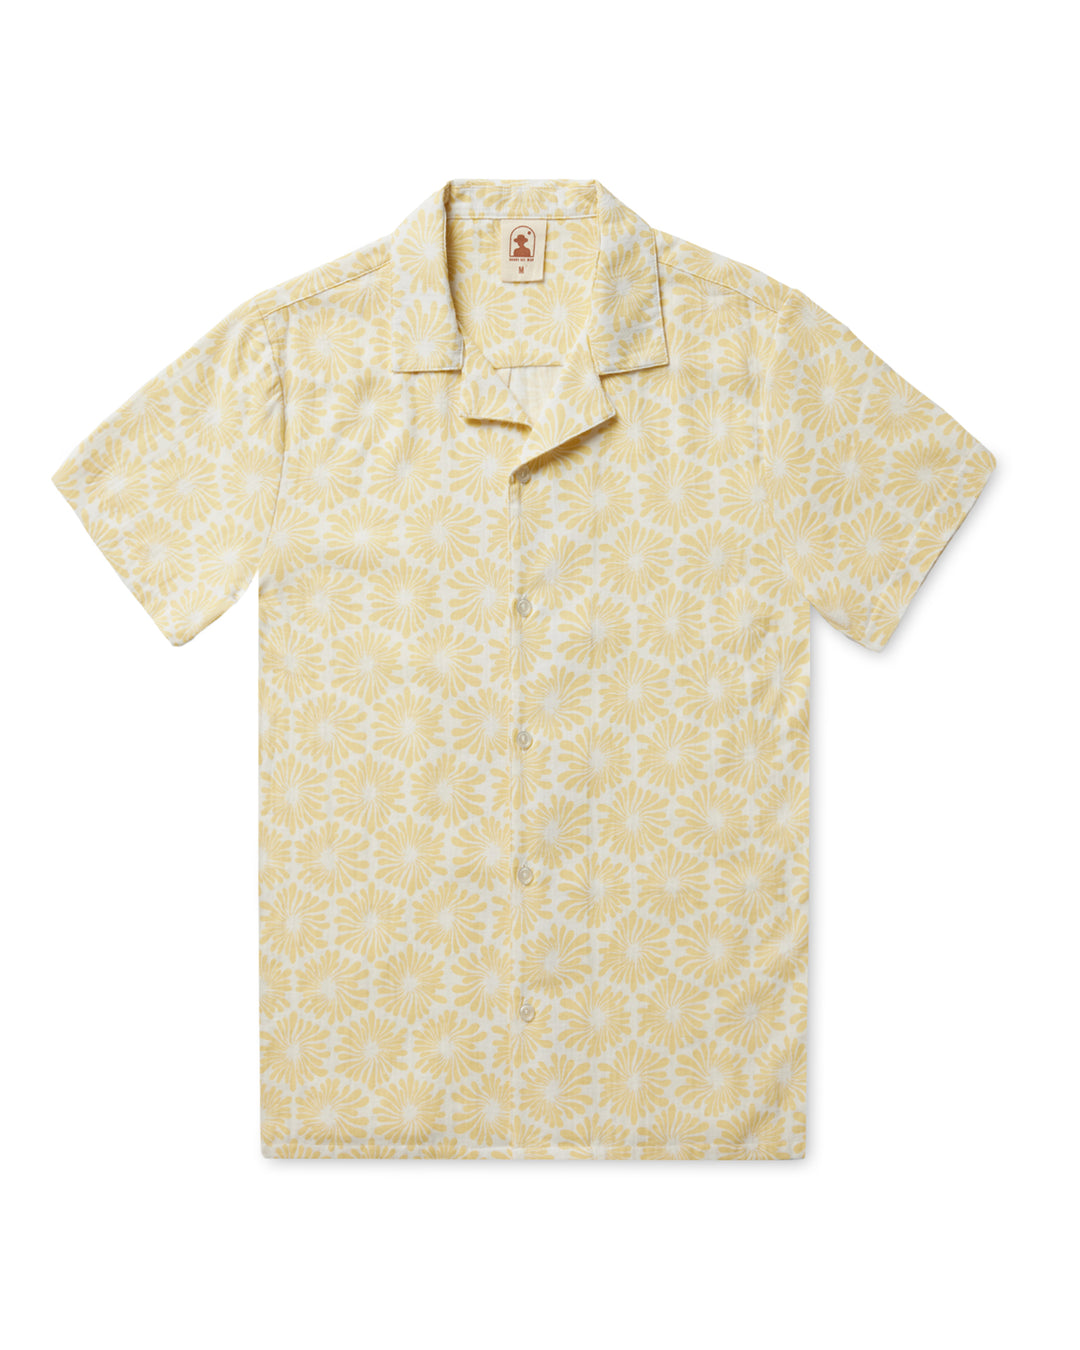 A cream fleur print shirt from Dandy Del Mar.